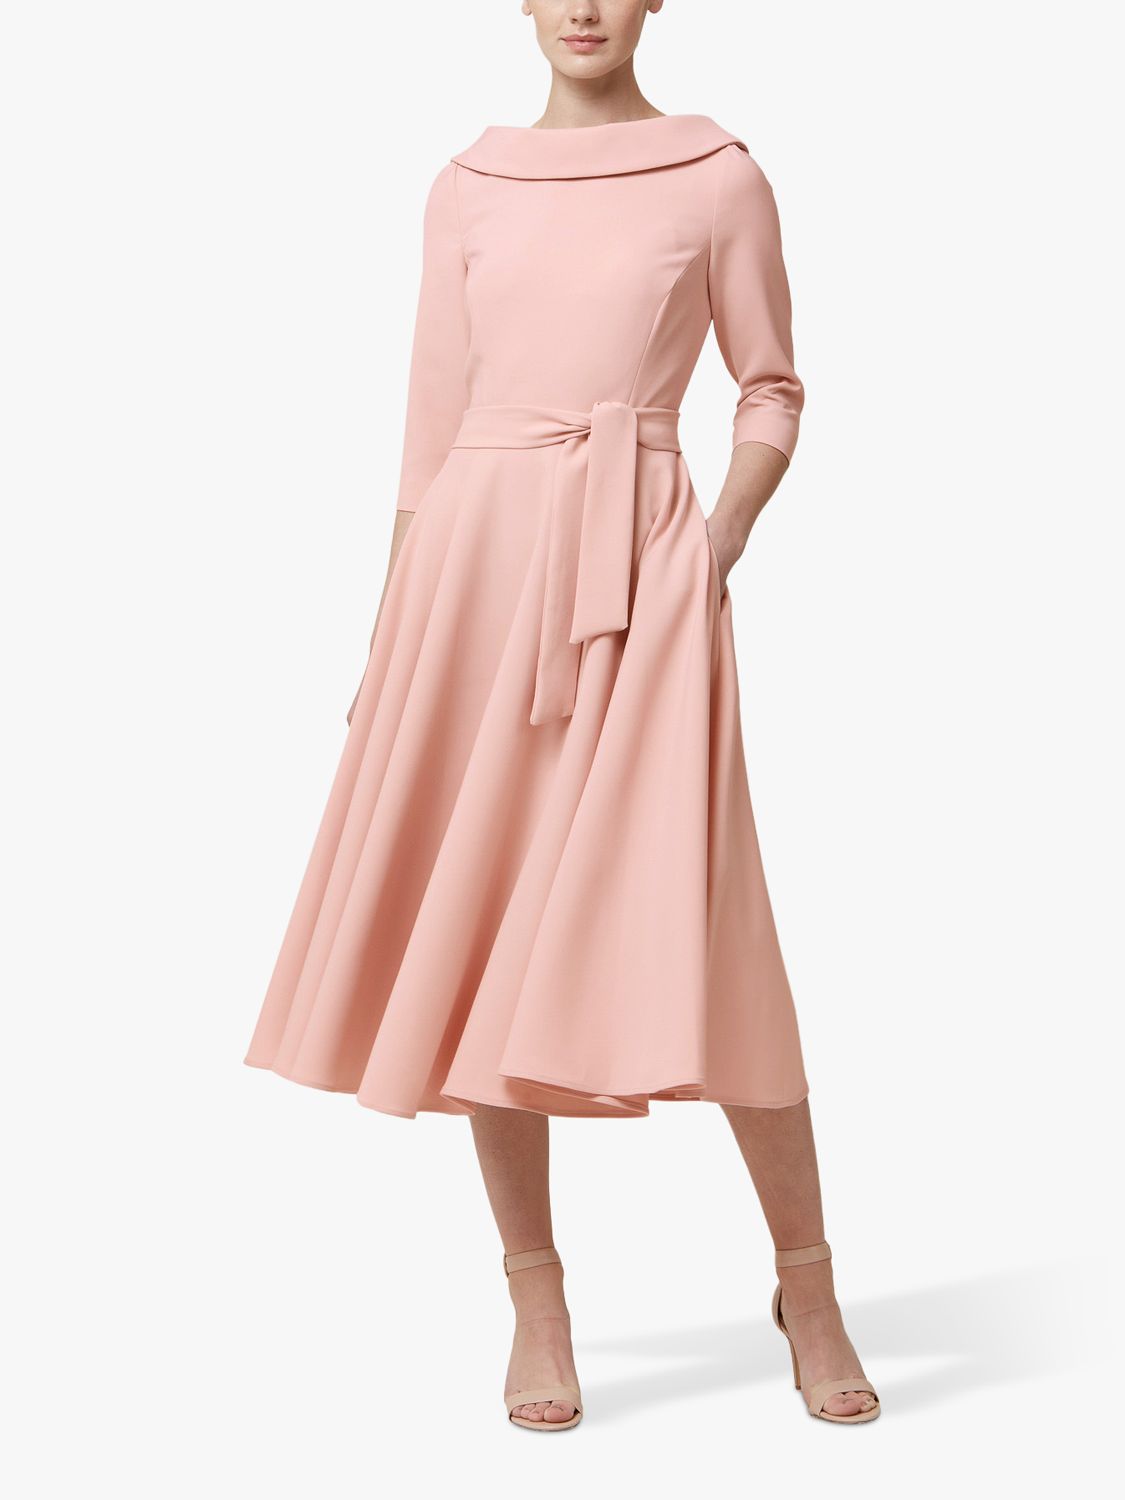 Helen McAlinden Marilyn Dress, Light Pink at John Lewis & Partners